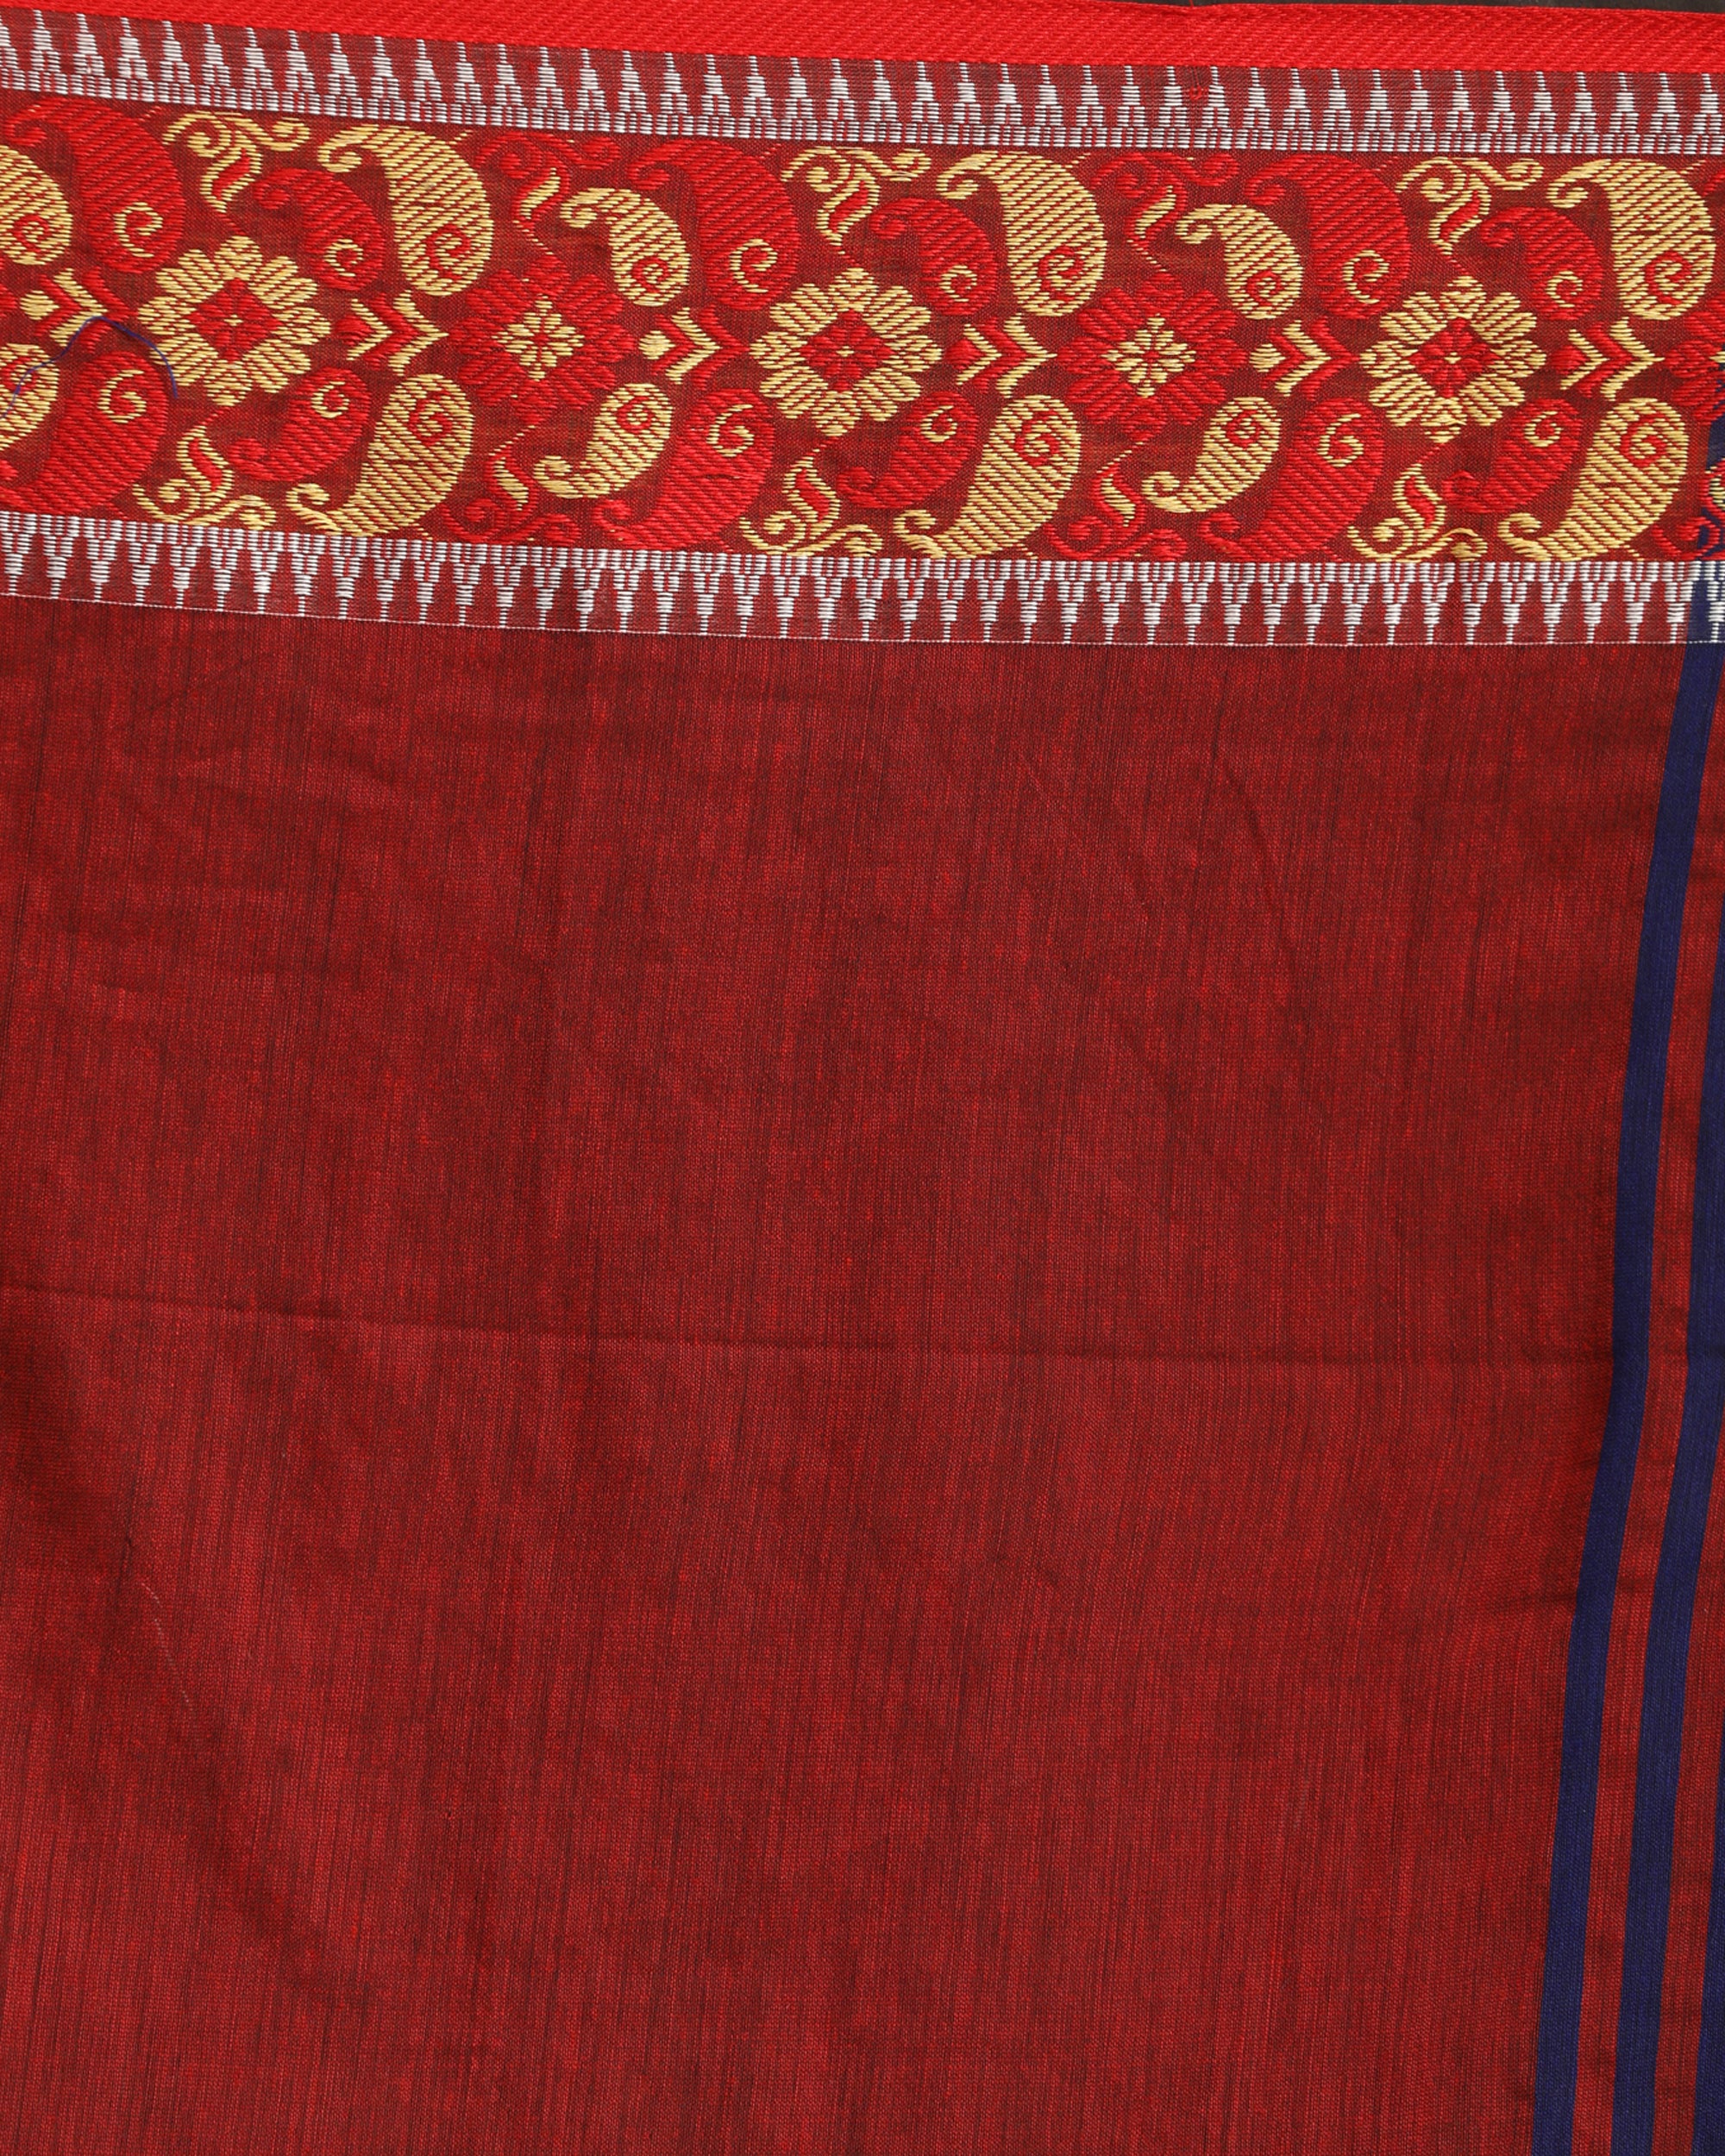 Women's Royel Blue Handloom Cotton Tangail Saree - Angoshobha